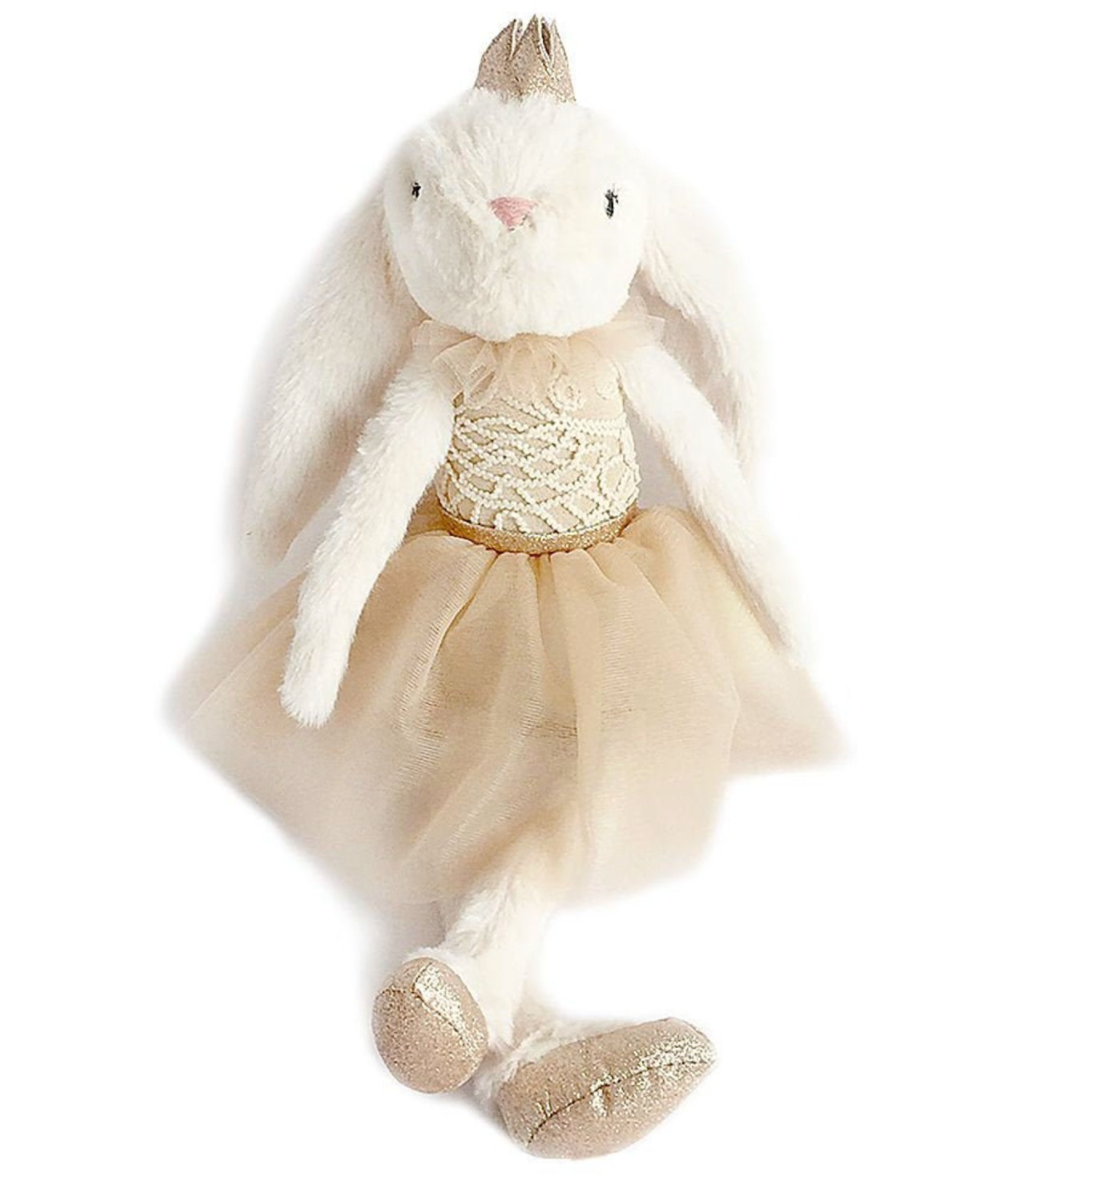 Princess Bunny Plush Toy "Bre"